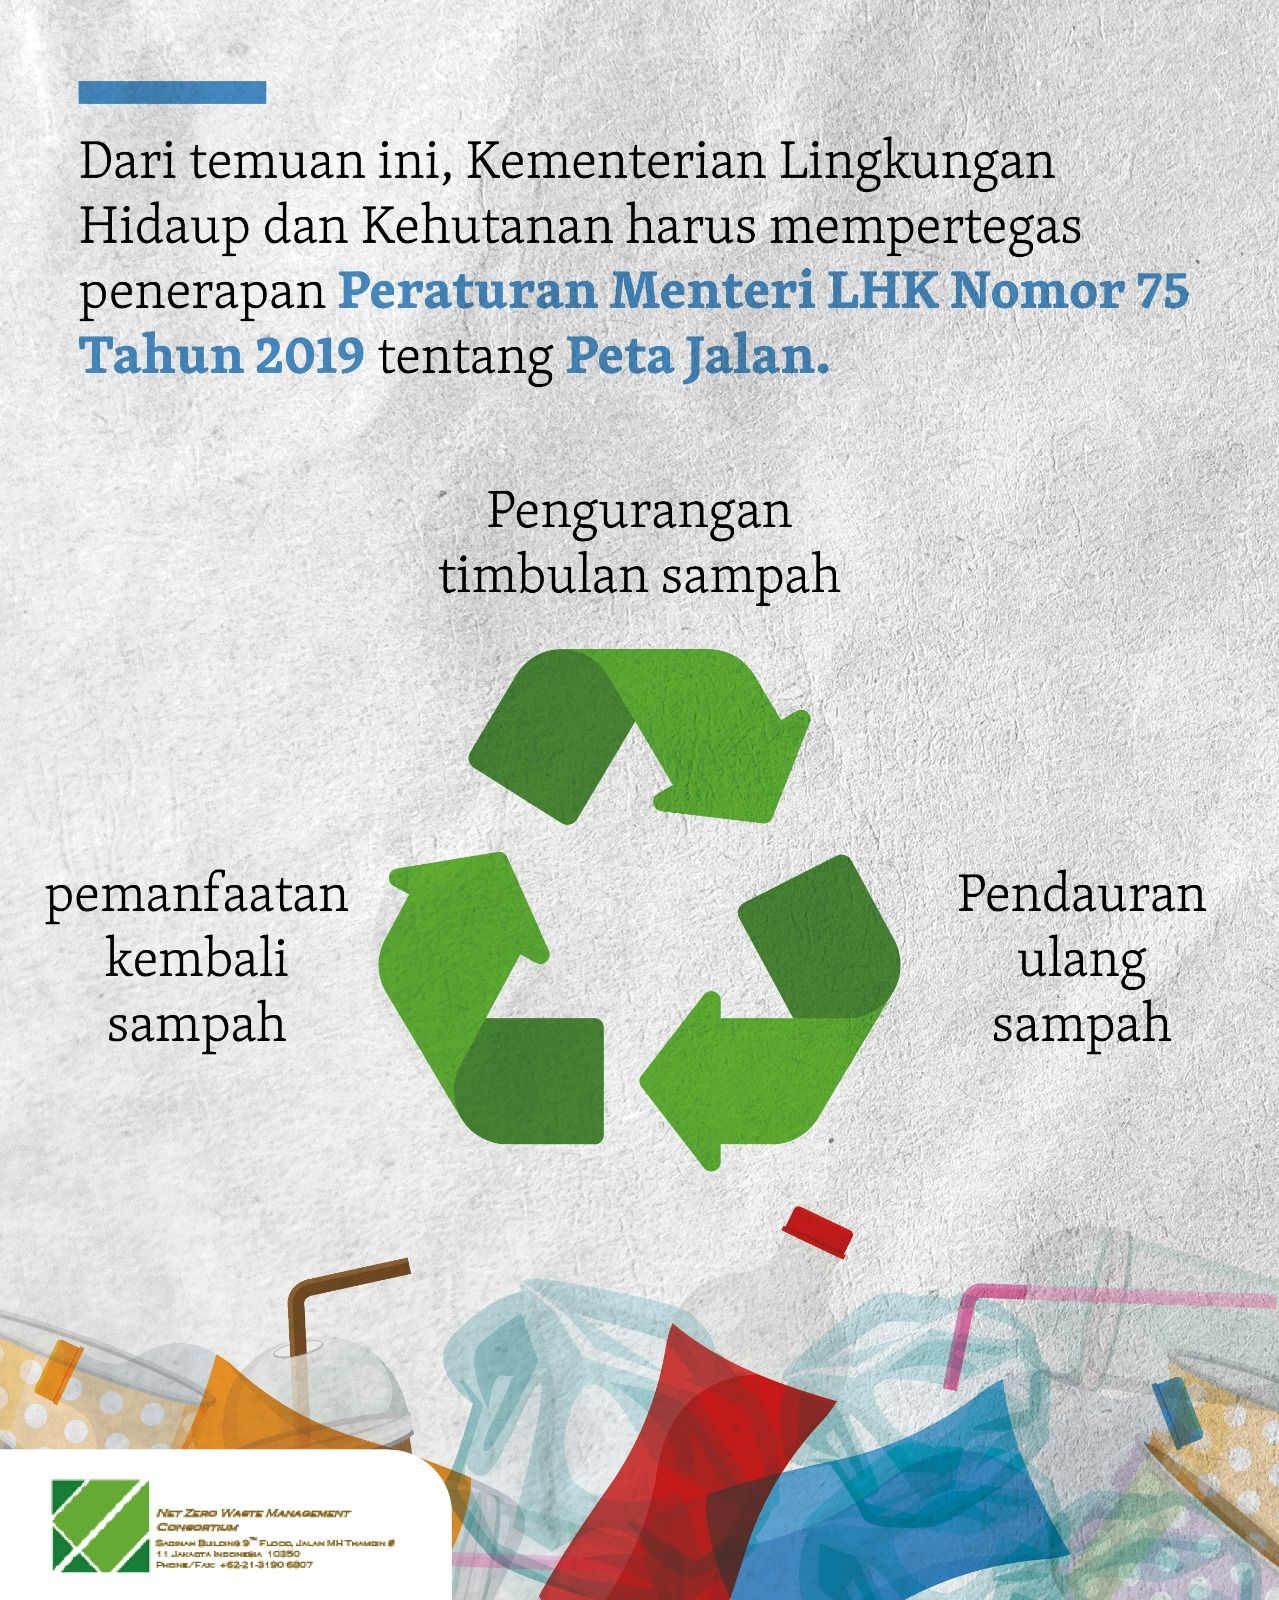 Proses pengurangan penumpukan sampah